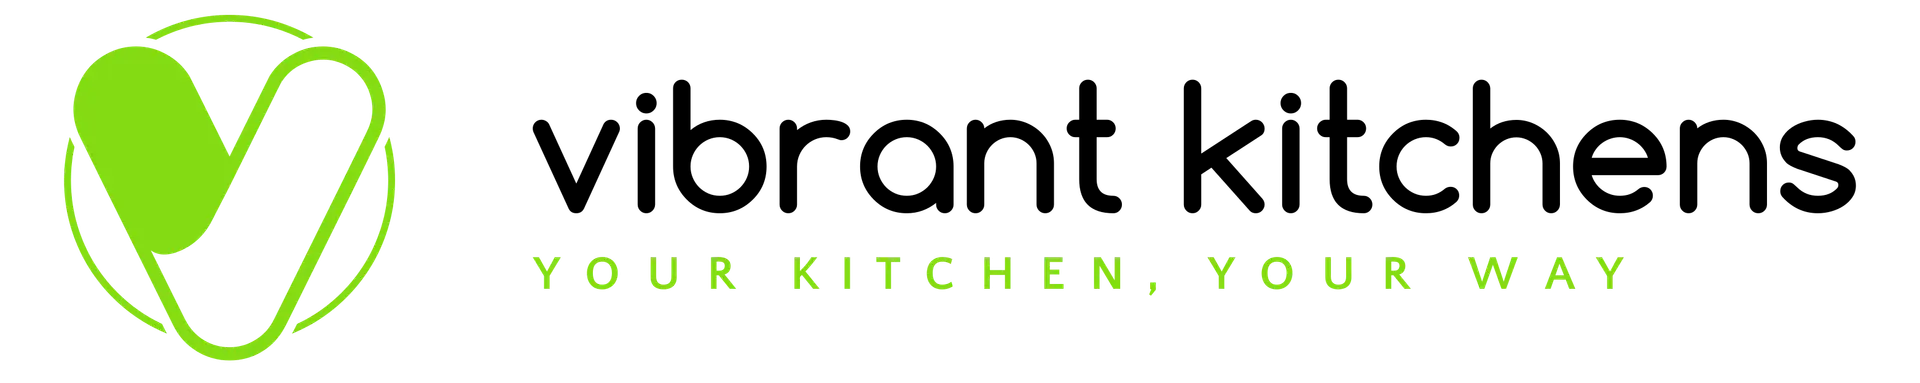 Vibrant Kitchens Canberra